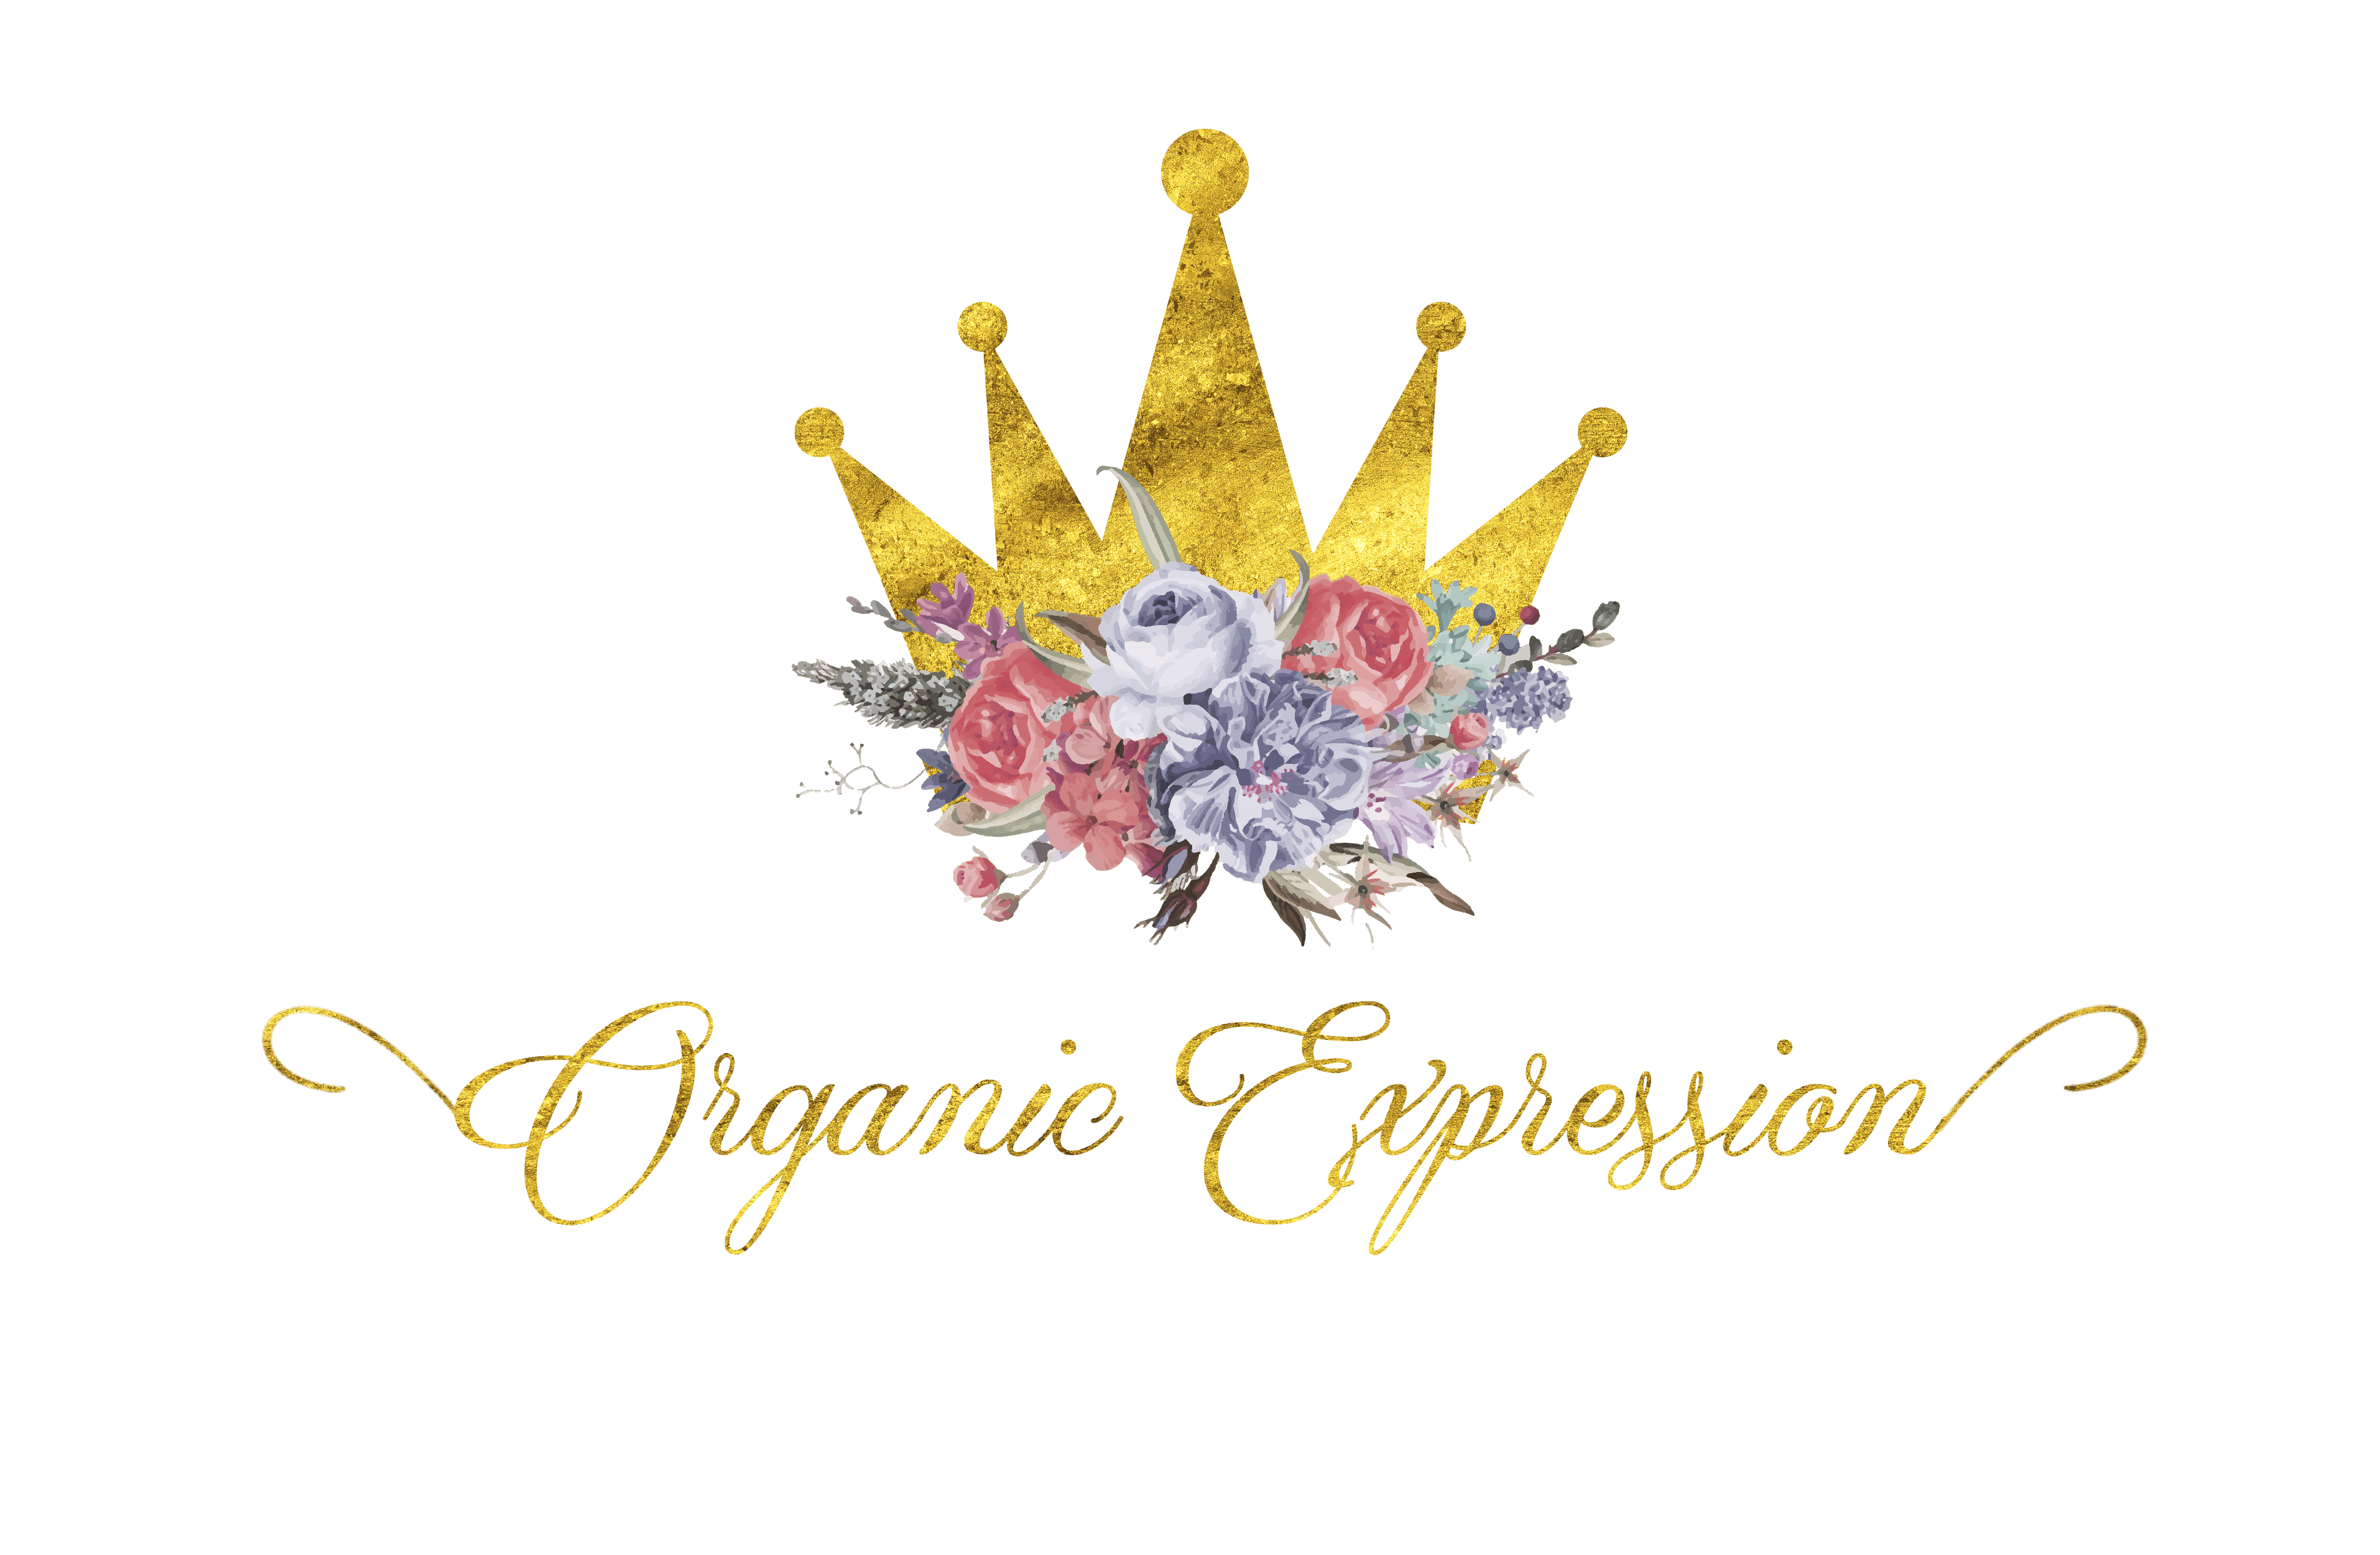 Organic Expression